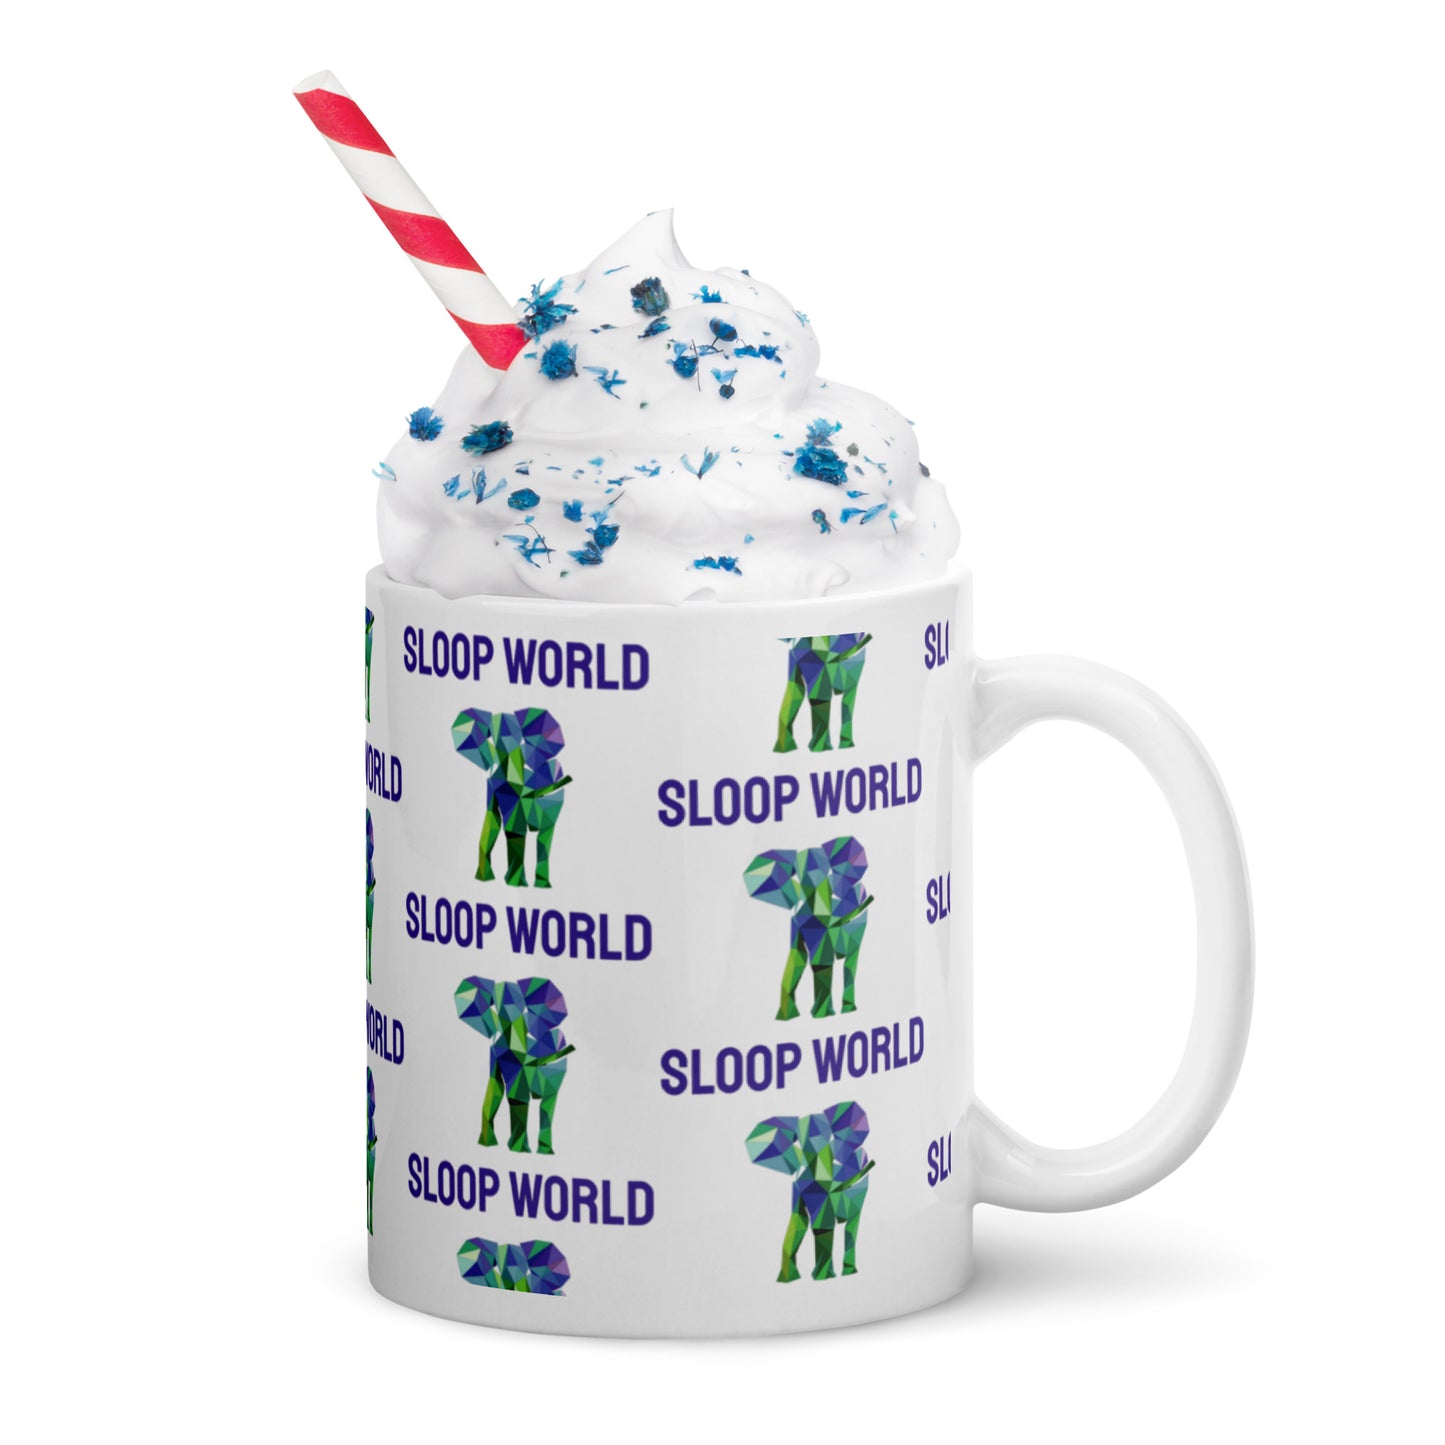 Sloop World white glossy mug